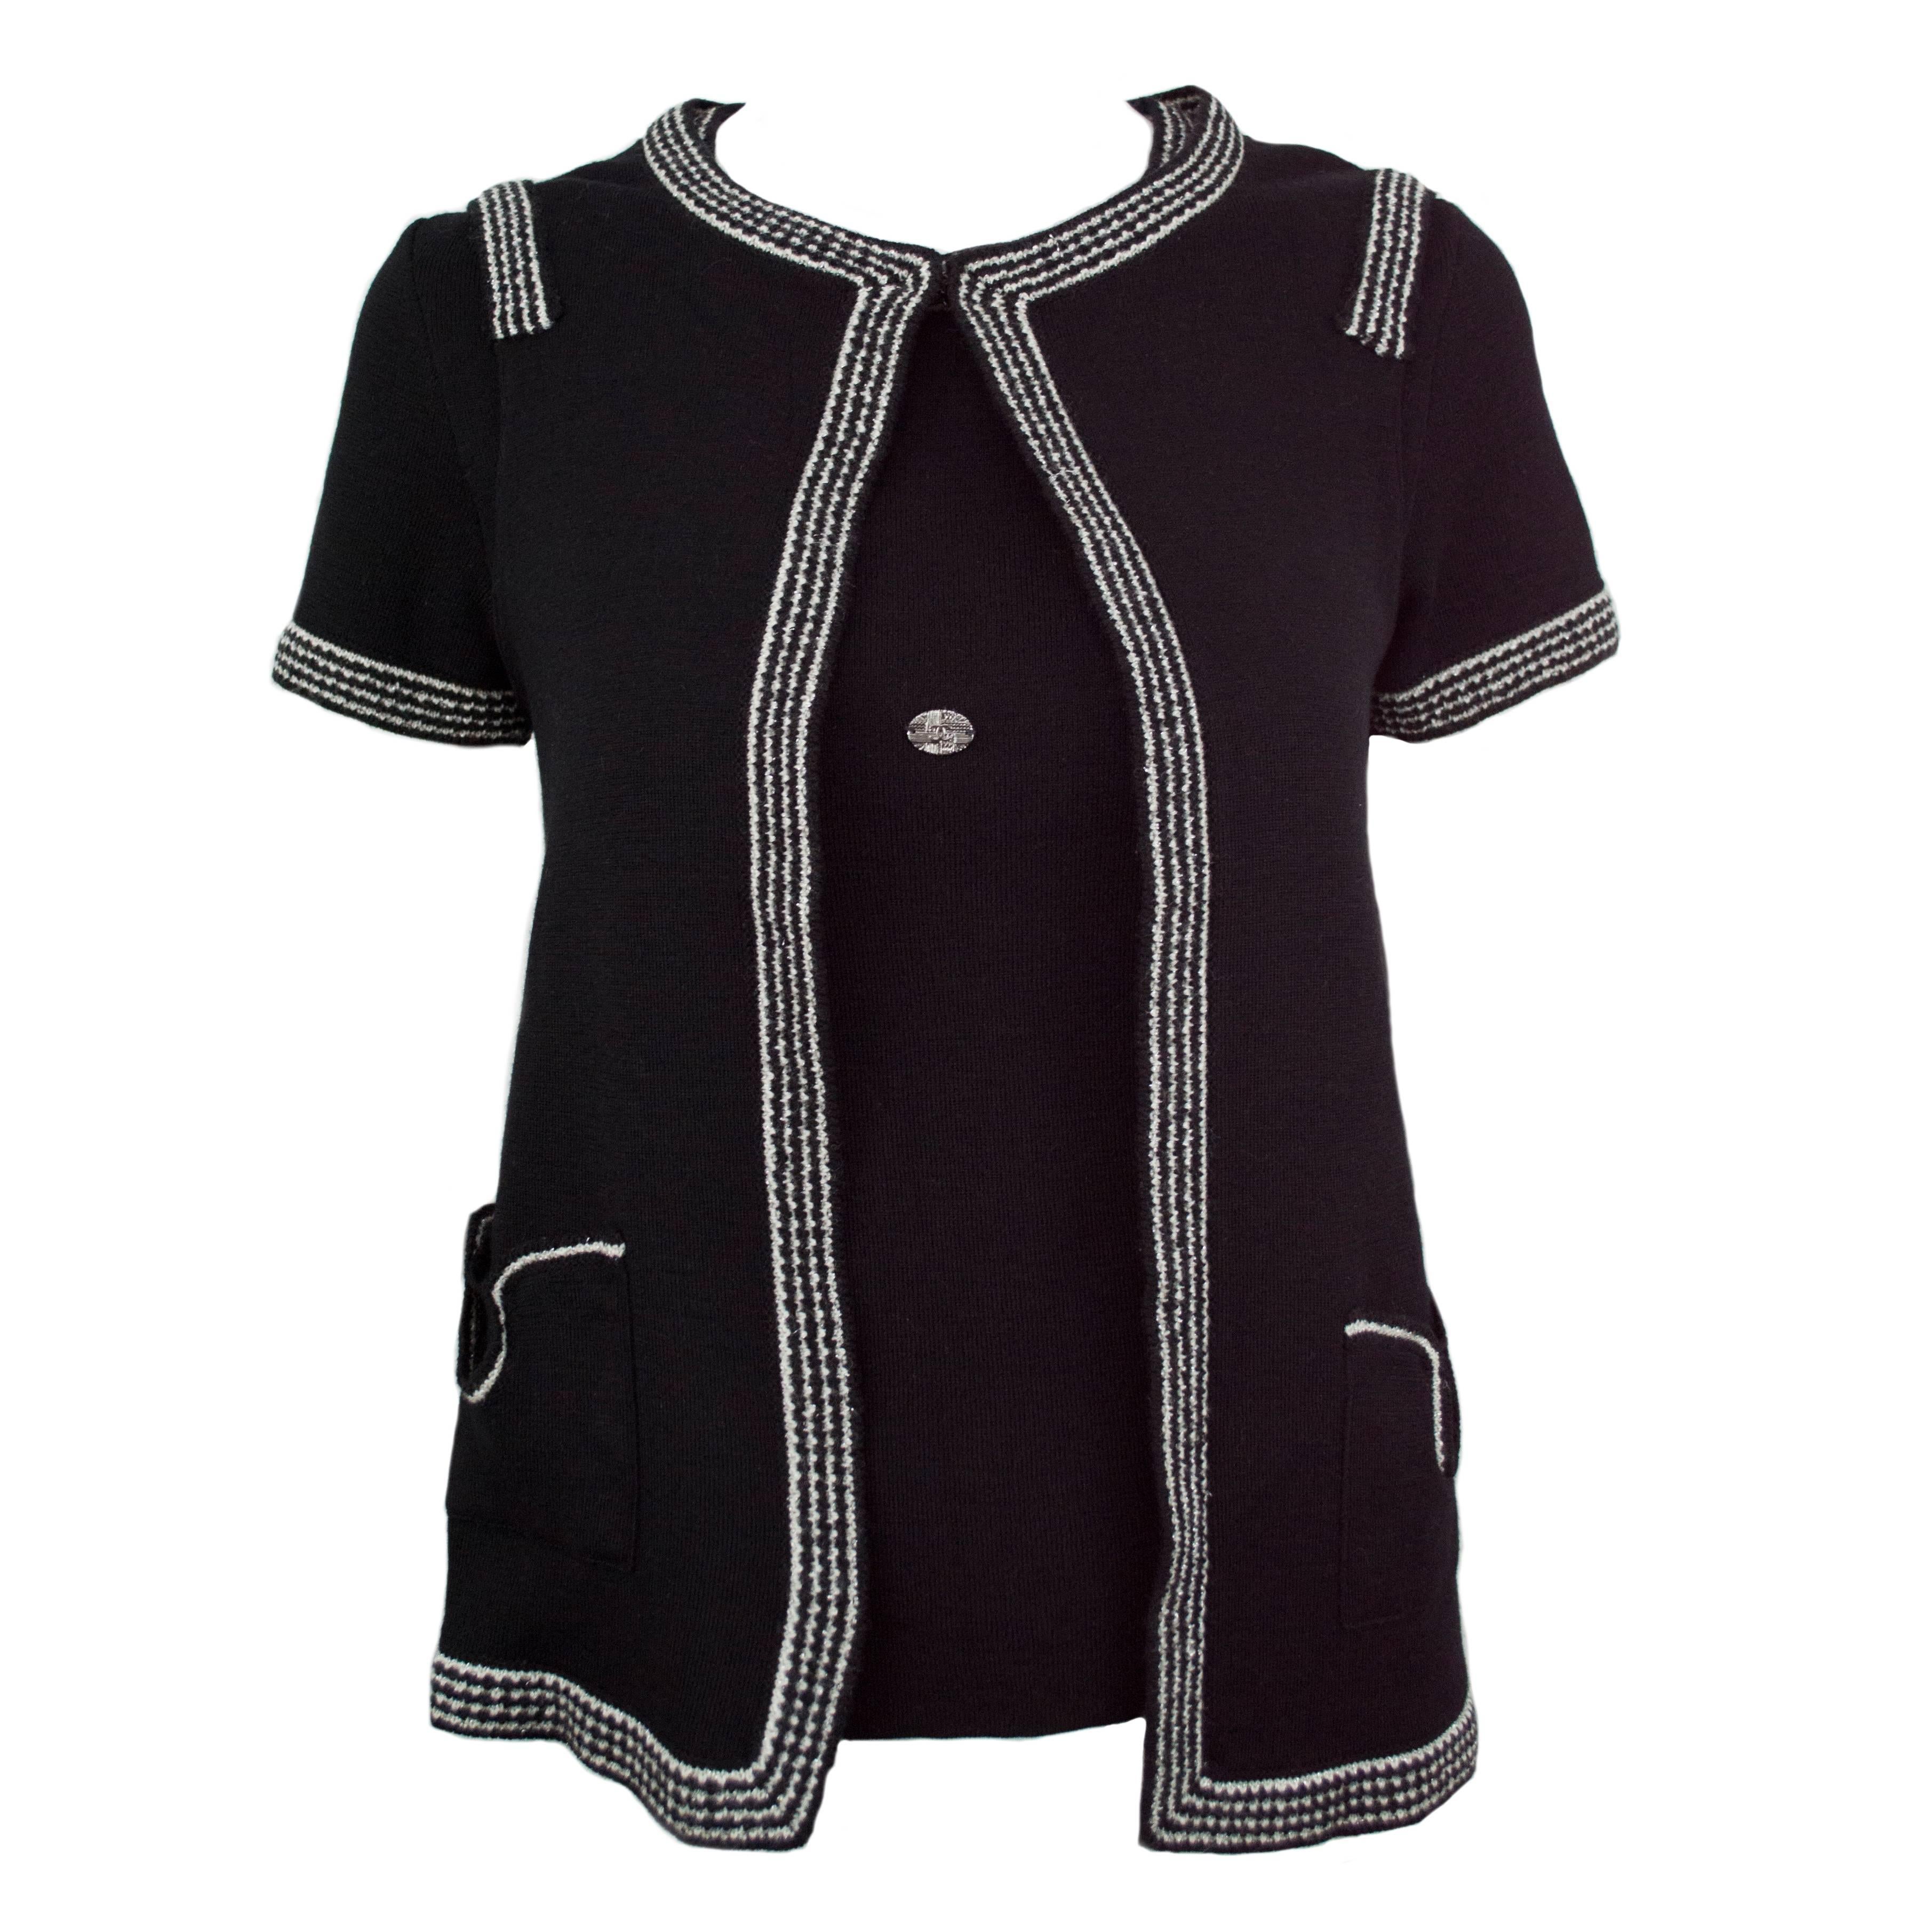 Chanel Black Metallic 2pc Twinset Sweater 36